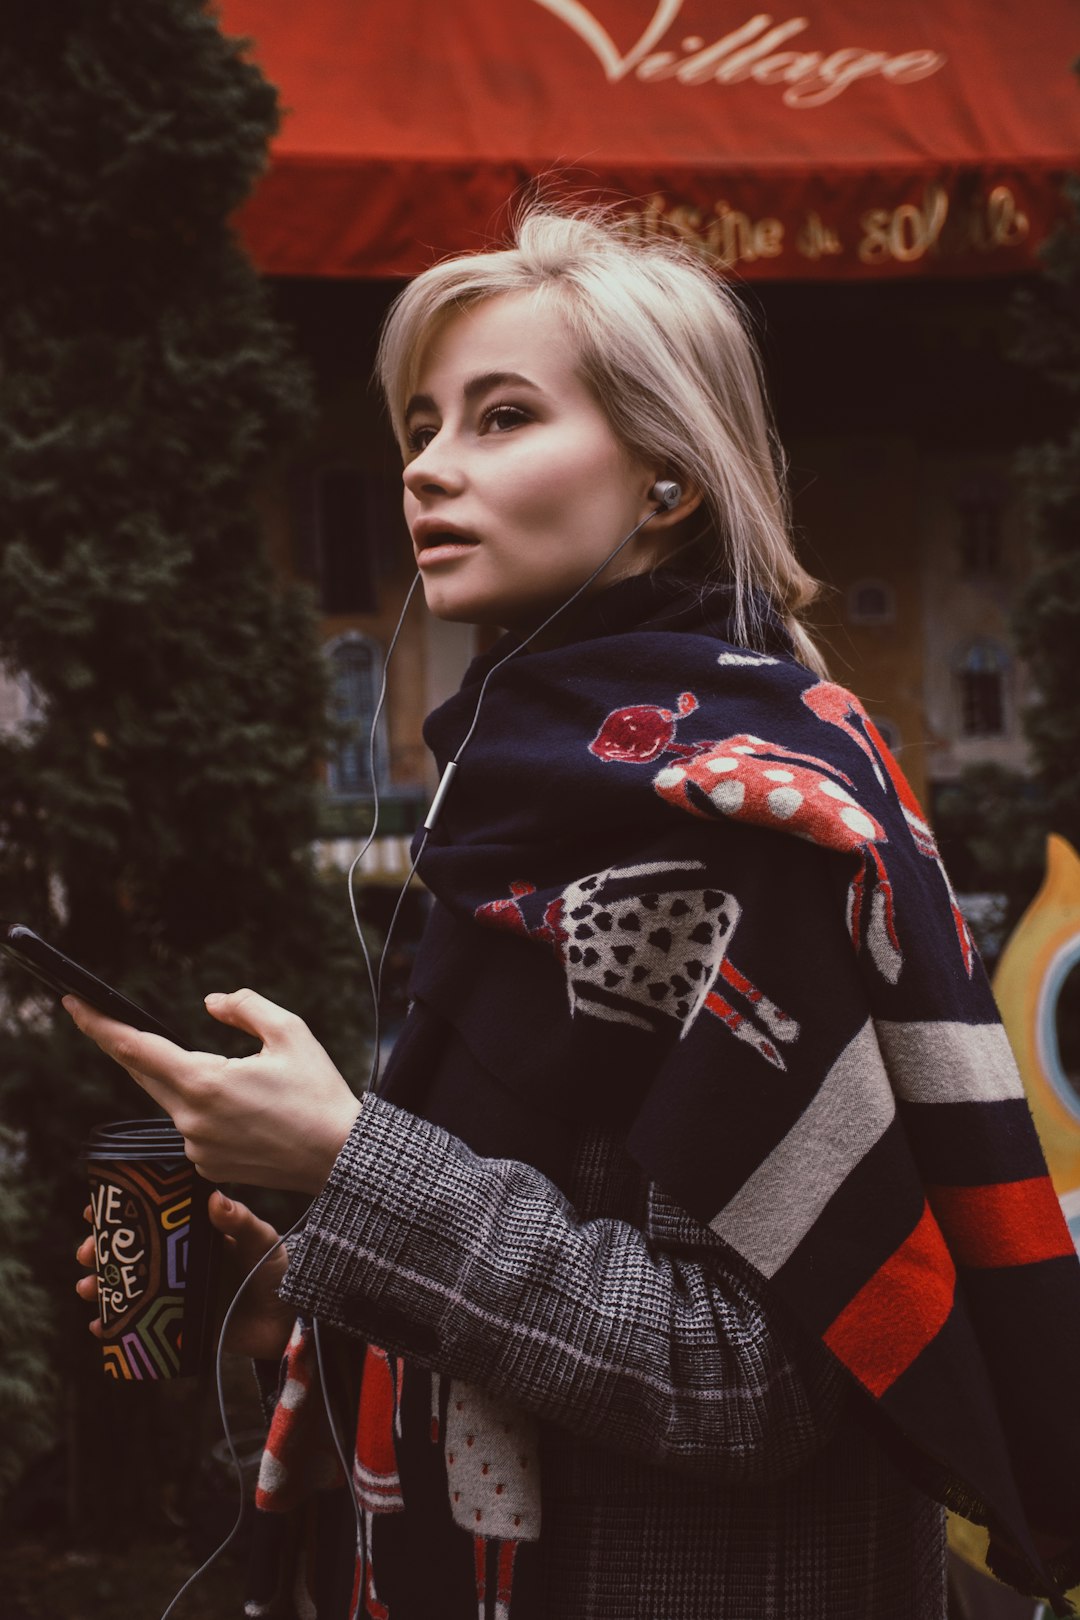 woman wearing earphones and scarf